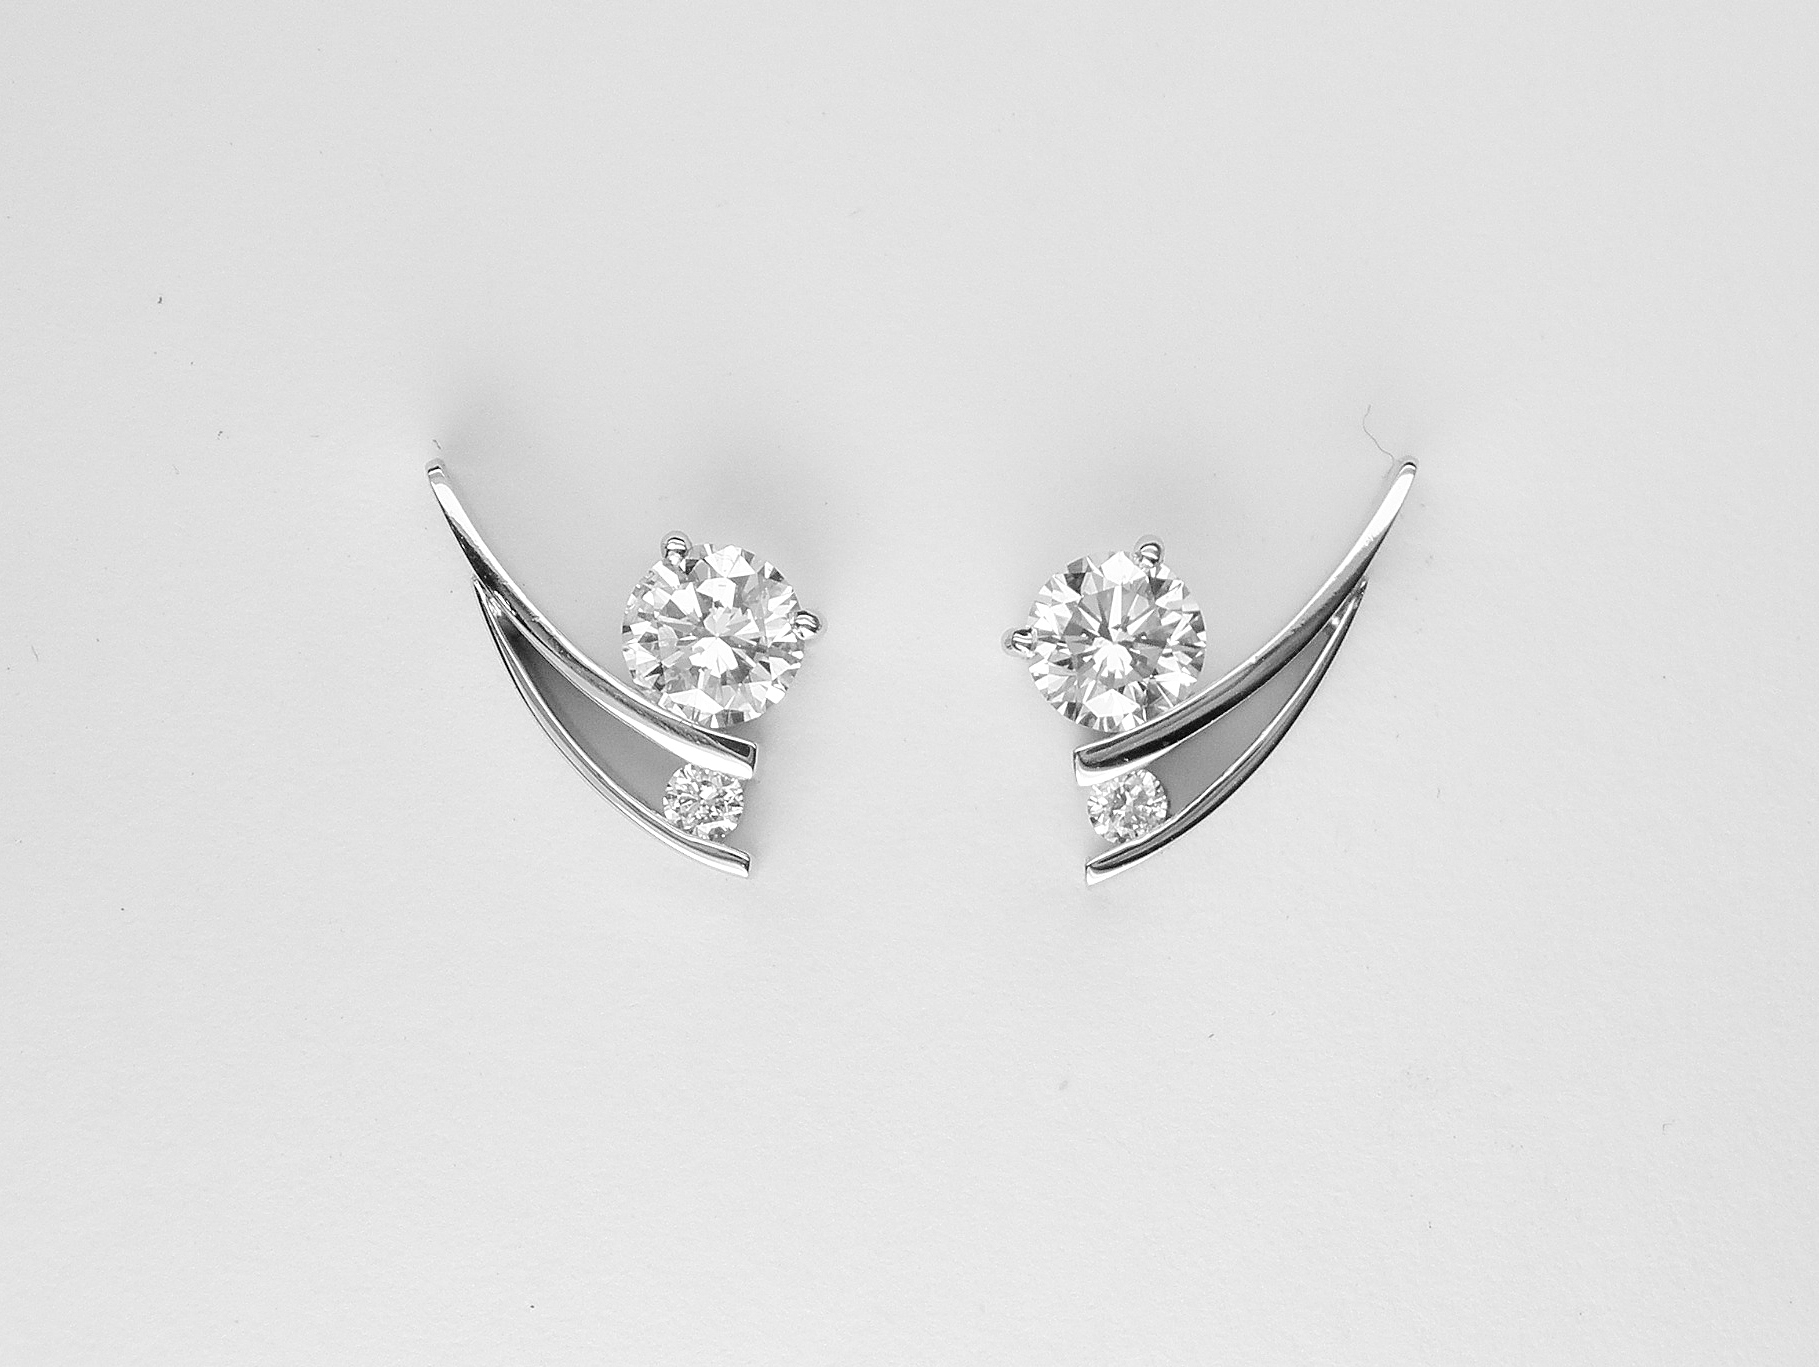 'Tick' style Platinum & palladium set 2 stone round brilliant cut diamond stud earrings.